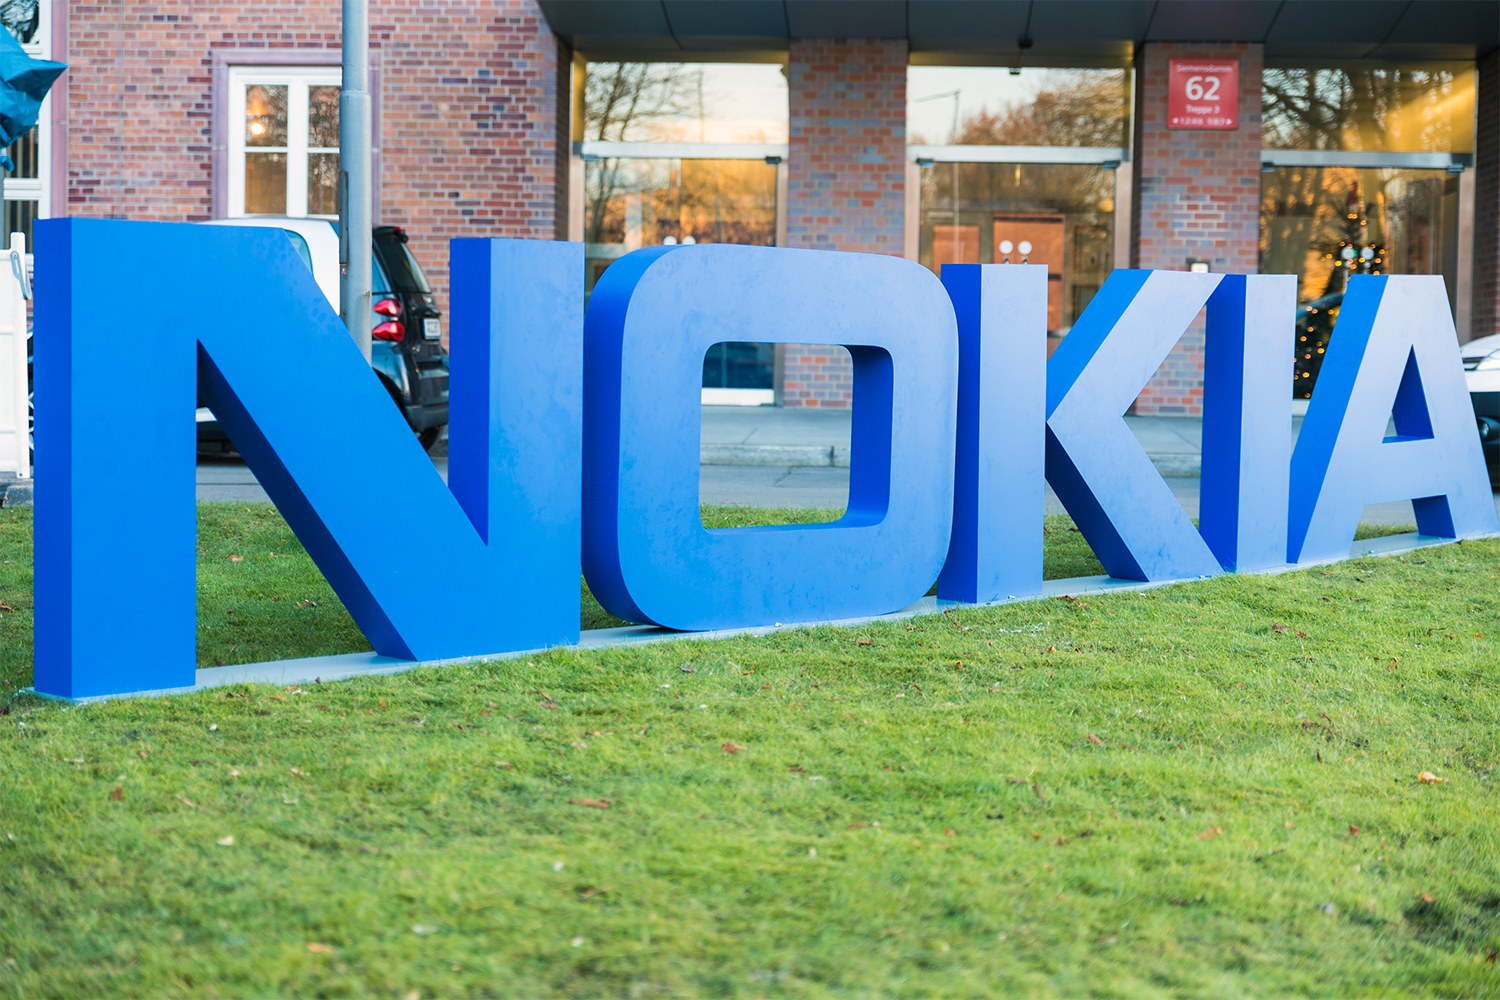 Nokia sign